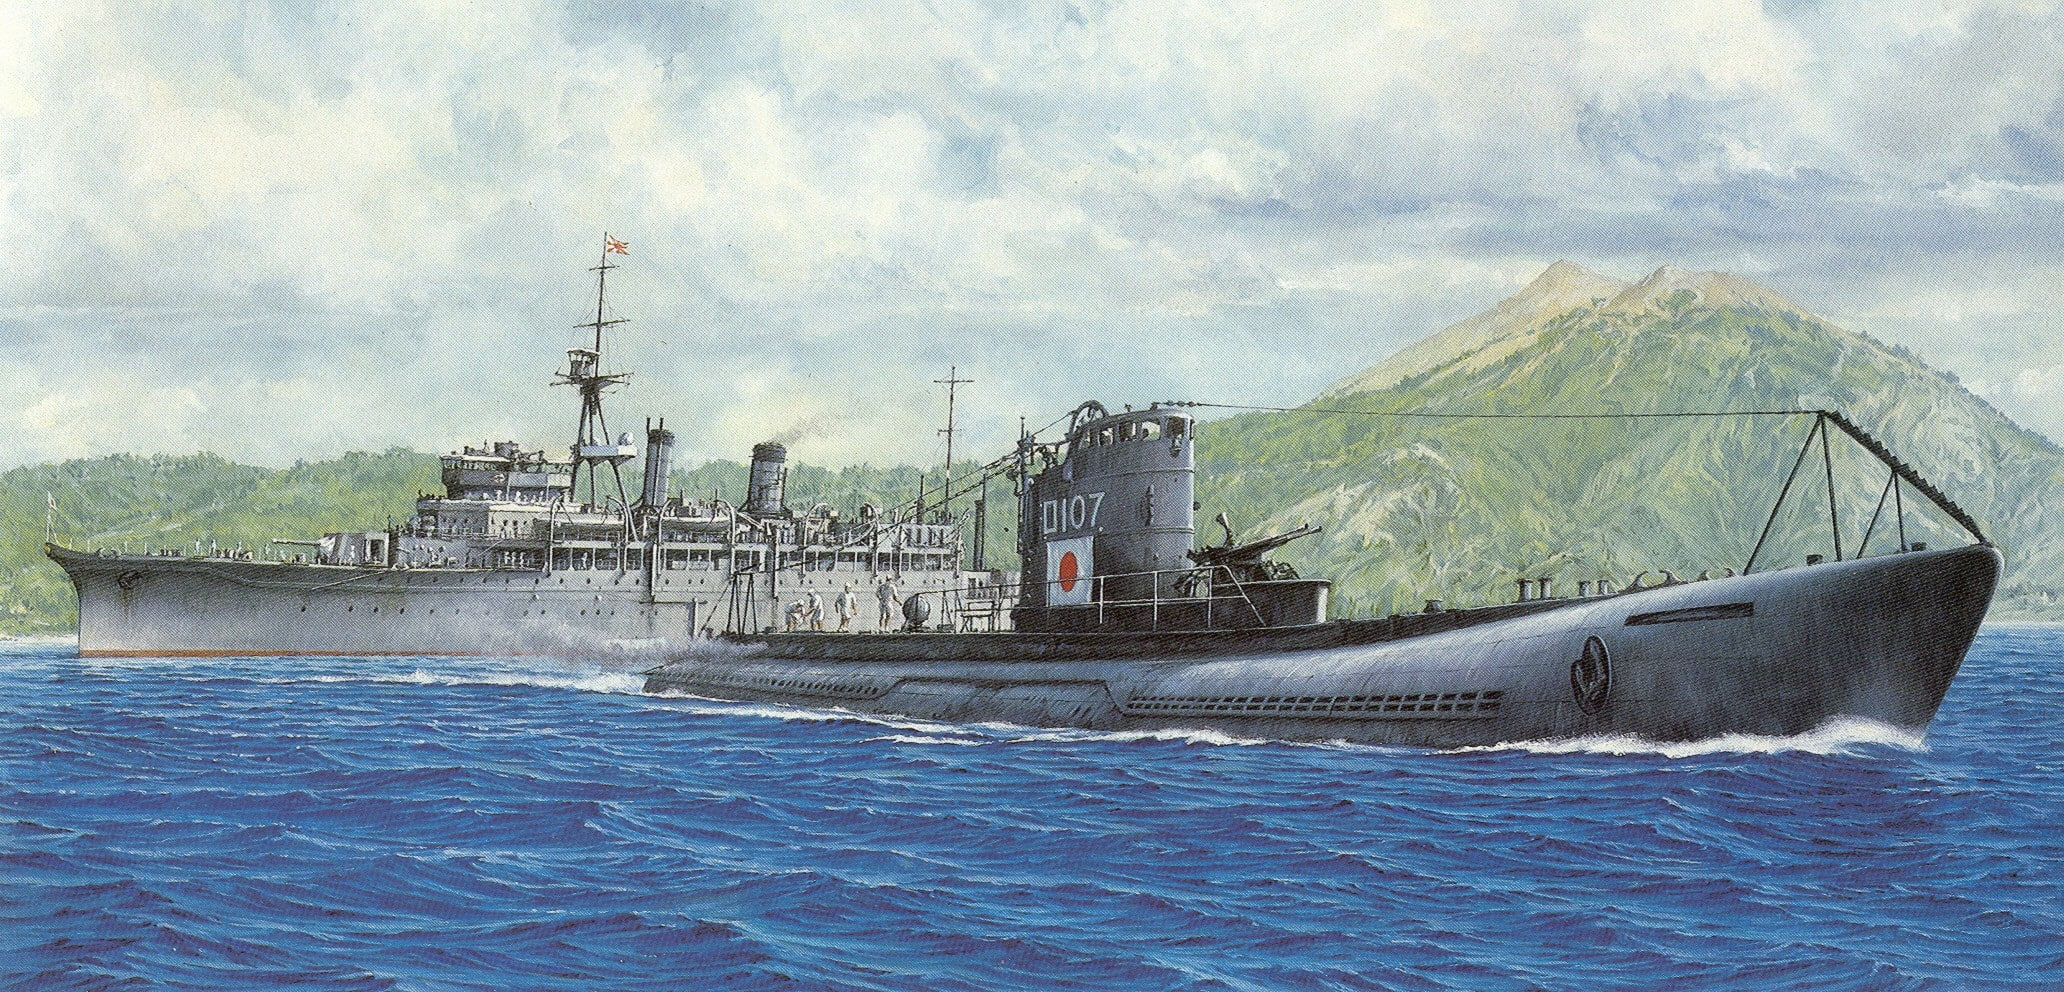 Iwo Jima, submarine, supply ship, Japan, military, warship